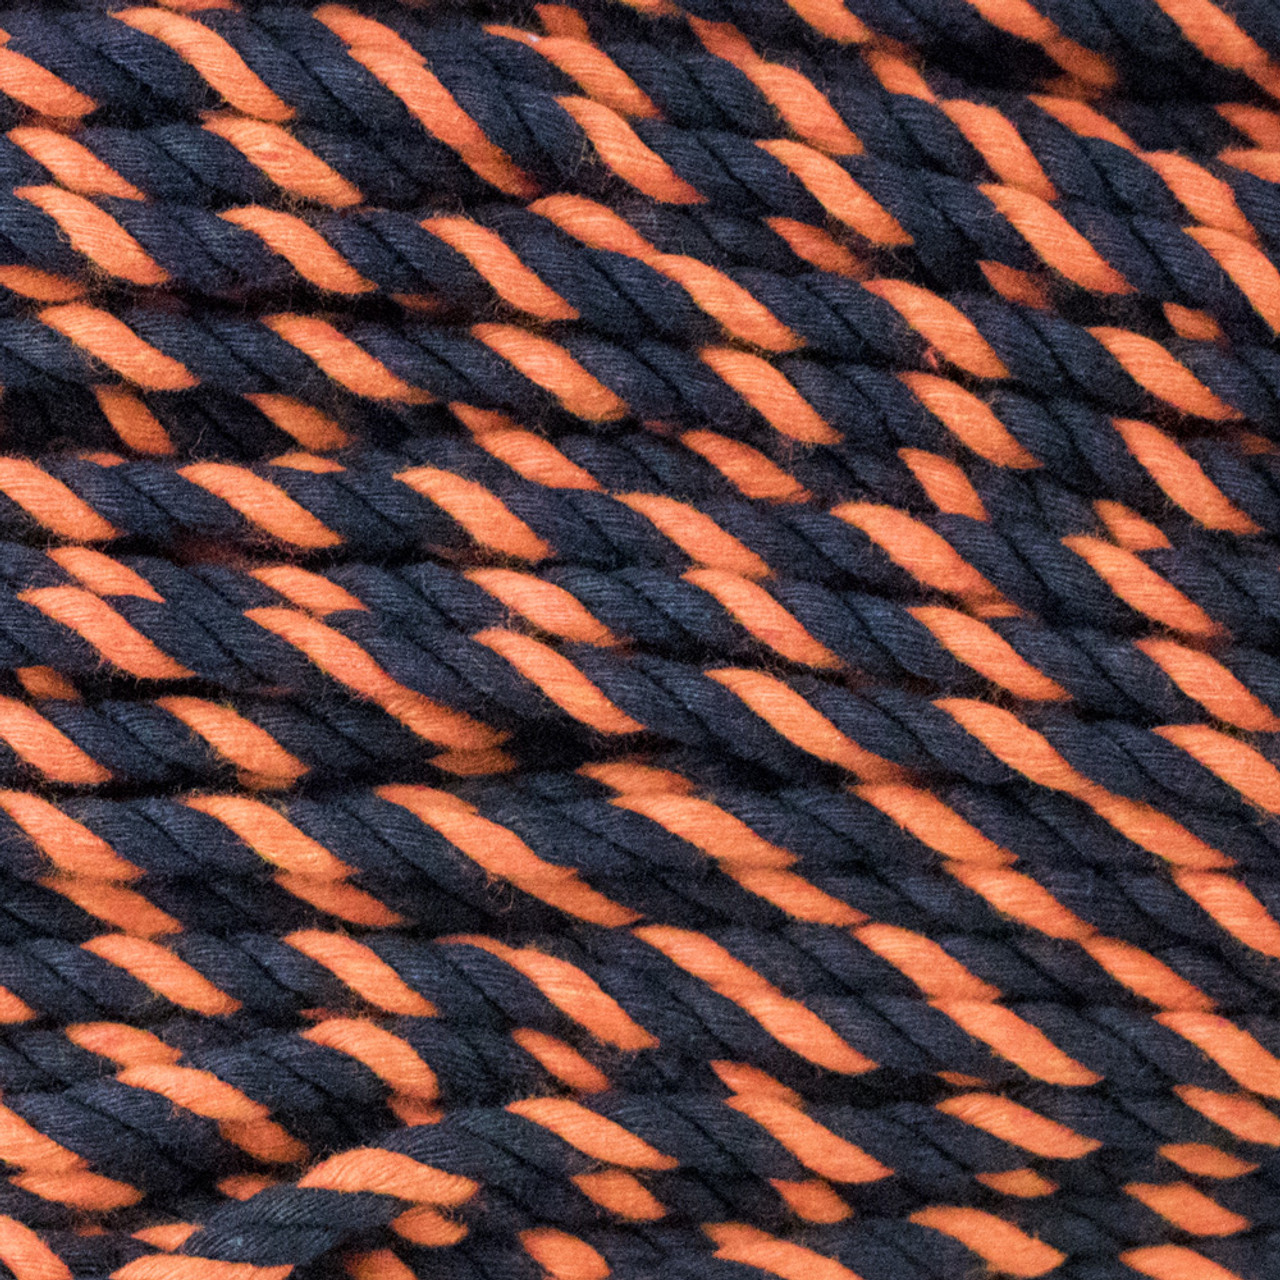 5/16 inch Para-Max Cord Spools - Neon Orange